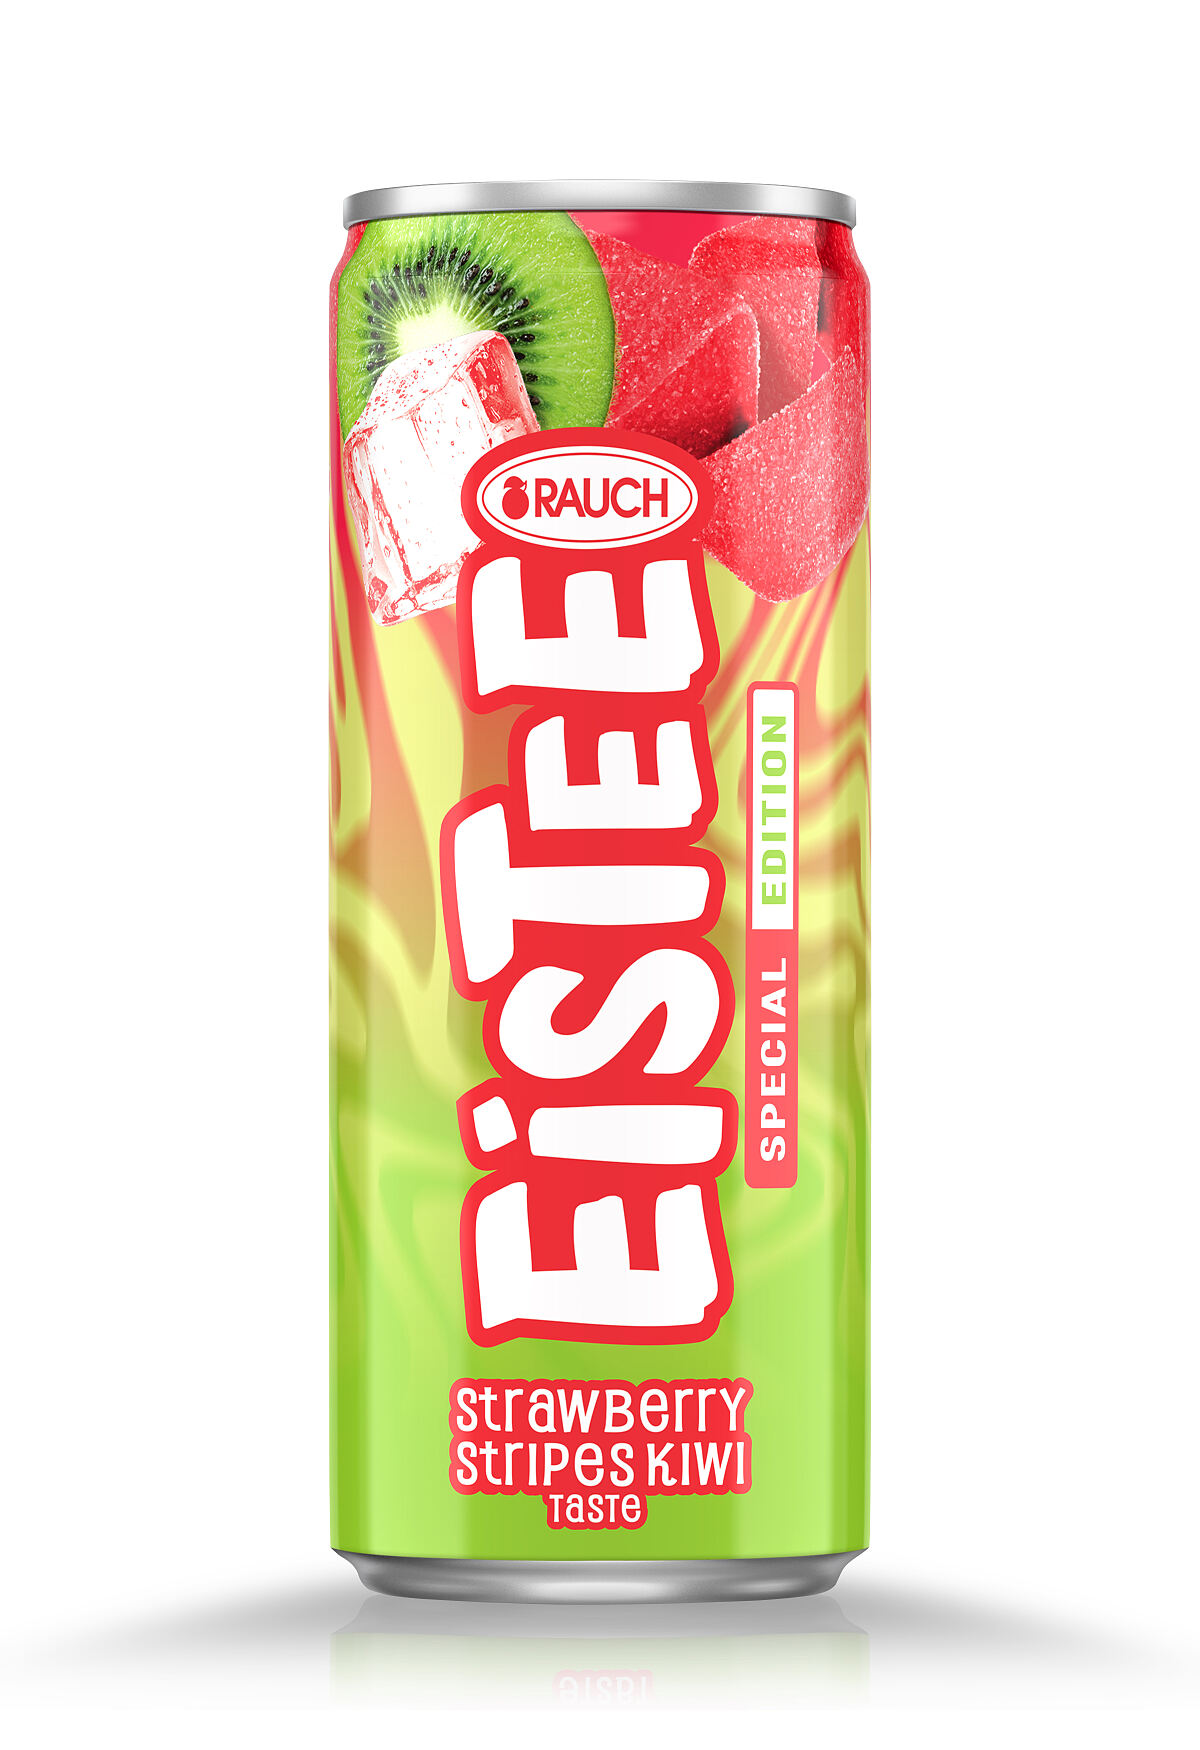 Rauch Eistee_Crazy Flavours_Strawberry Stripes Kiwi_EUR 1,05_©Rauch Eistee